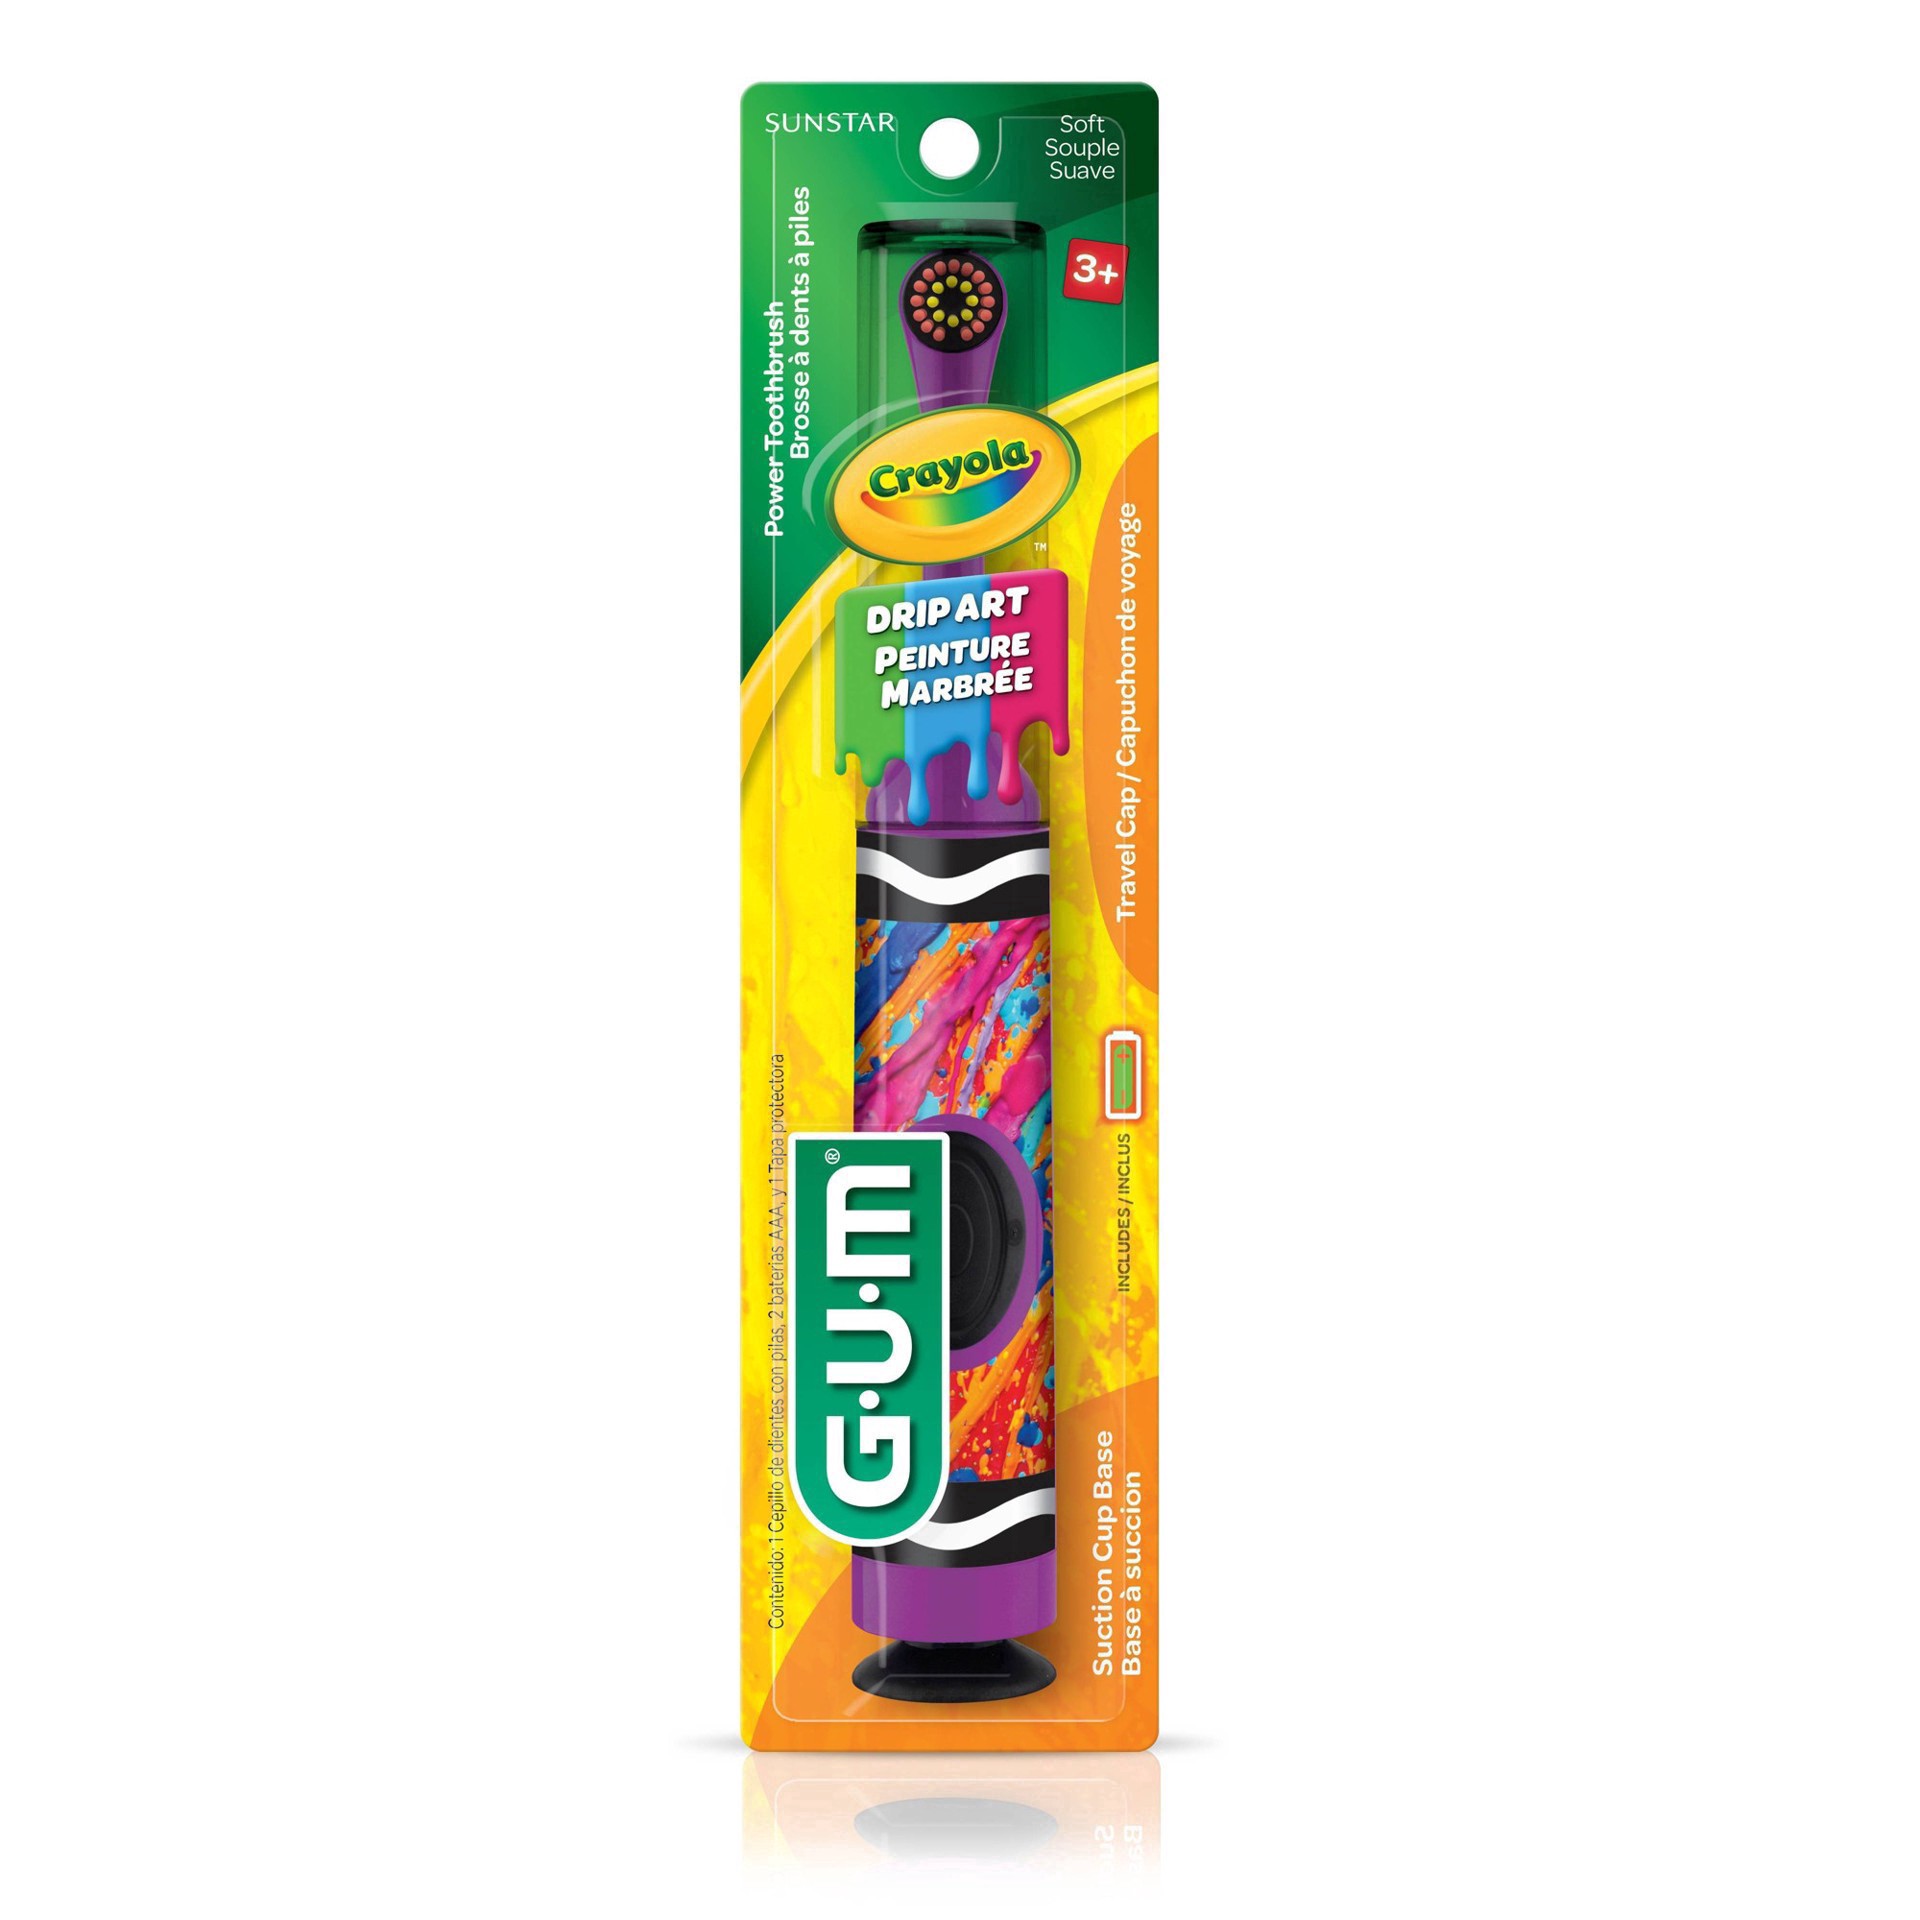 slide 46 of 50, G-U-M Crayola Electric Toothbrush, 1 ct